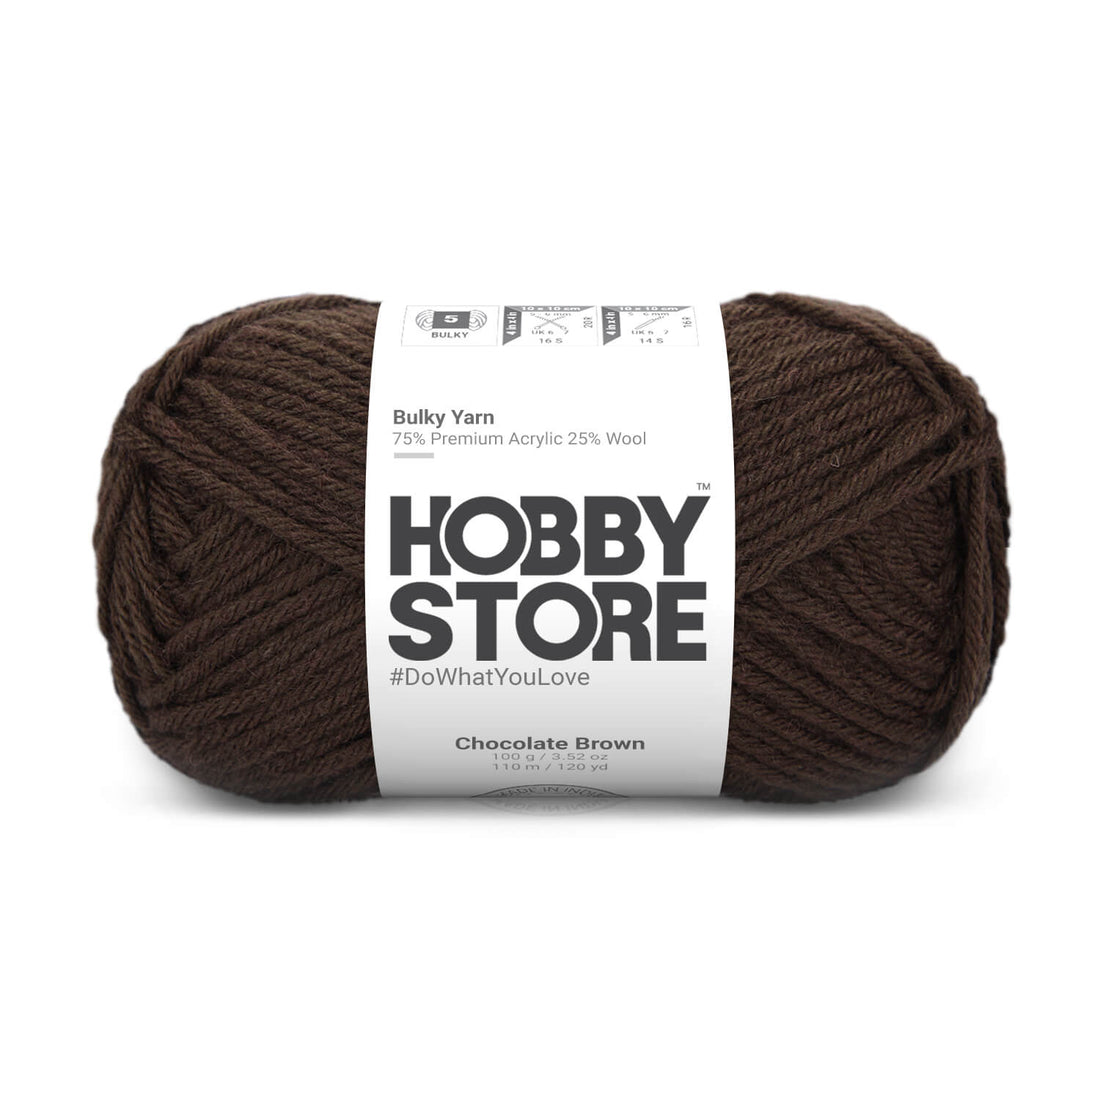 Bulky Yarn by Hobby Store - Chocolate Brown 6035